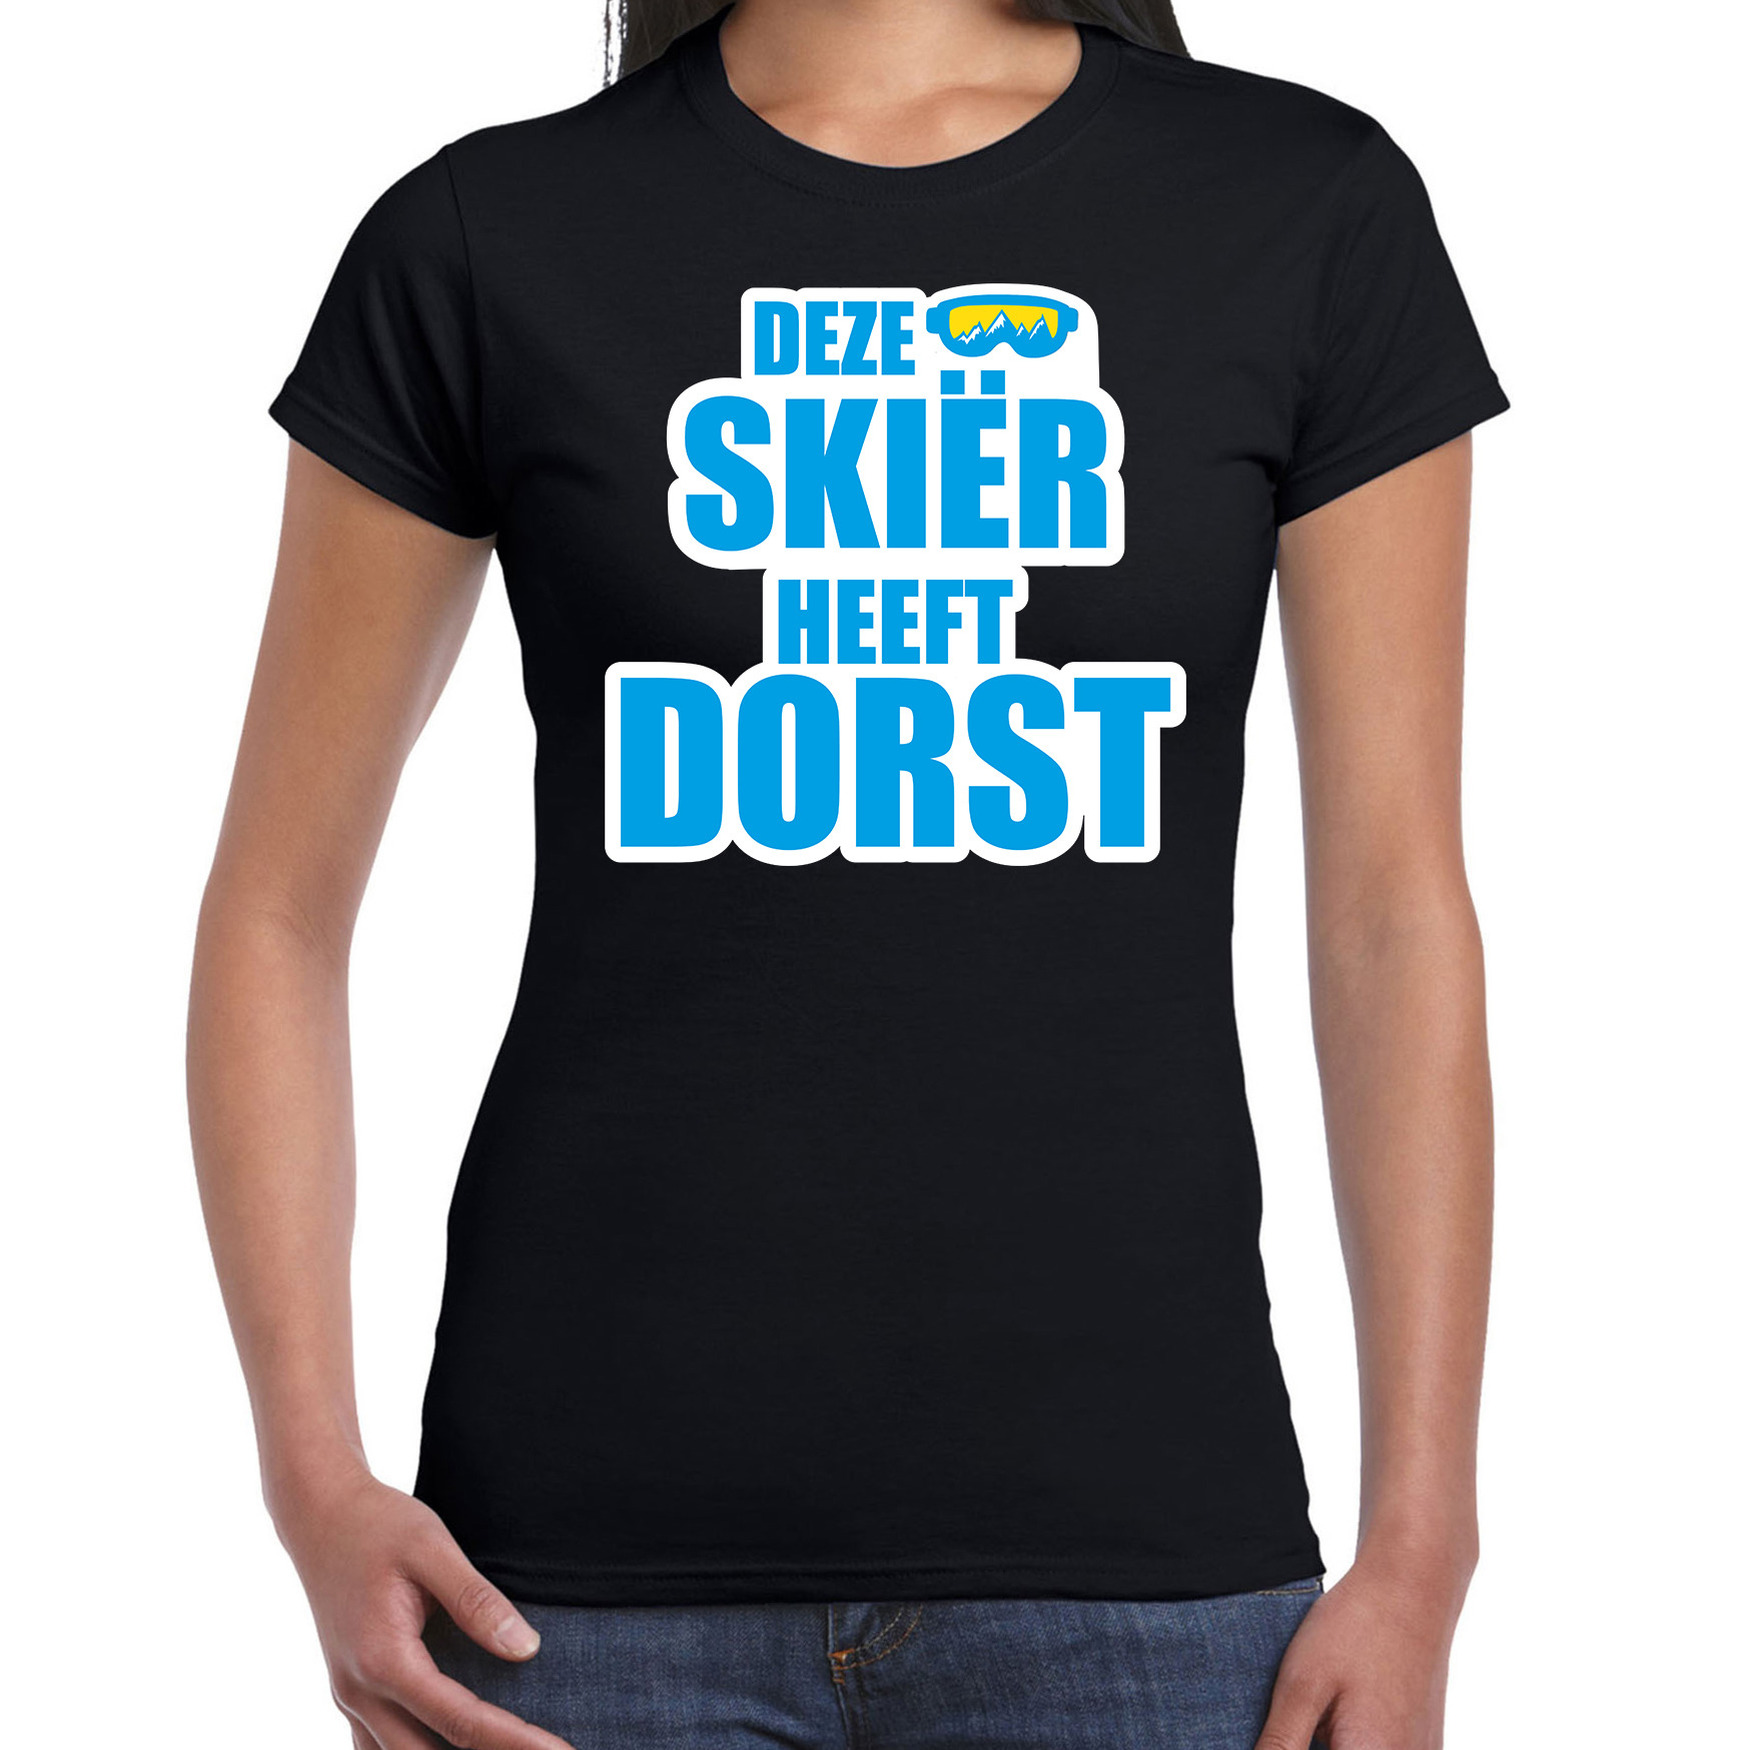 Apres ski t-shirt Deze skieer heeft dorst zwart dames Wintersport shirt Foute apres ski outfit